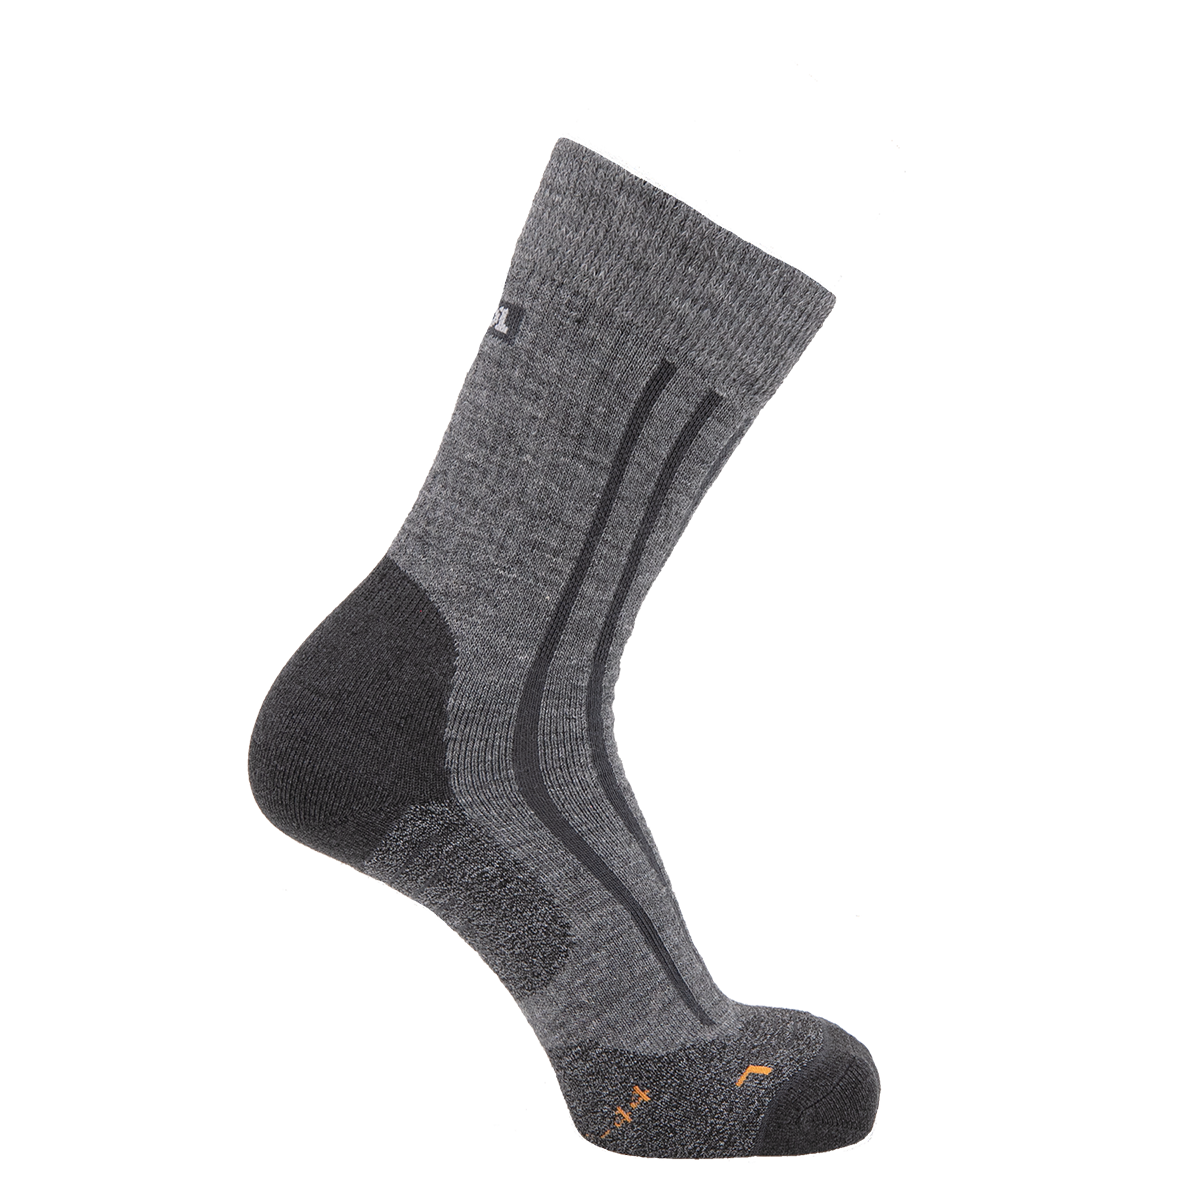 Meindl MT6 Mid-Weight Merino Wool Socks